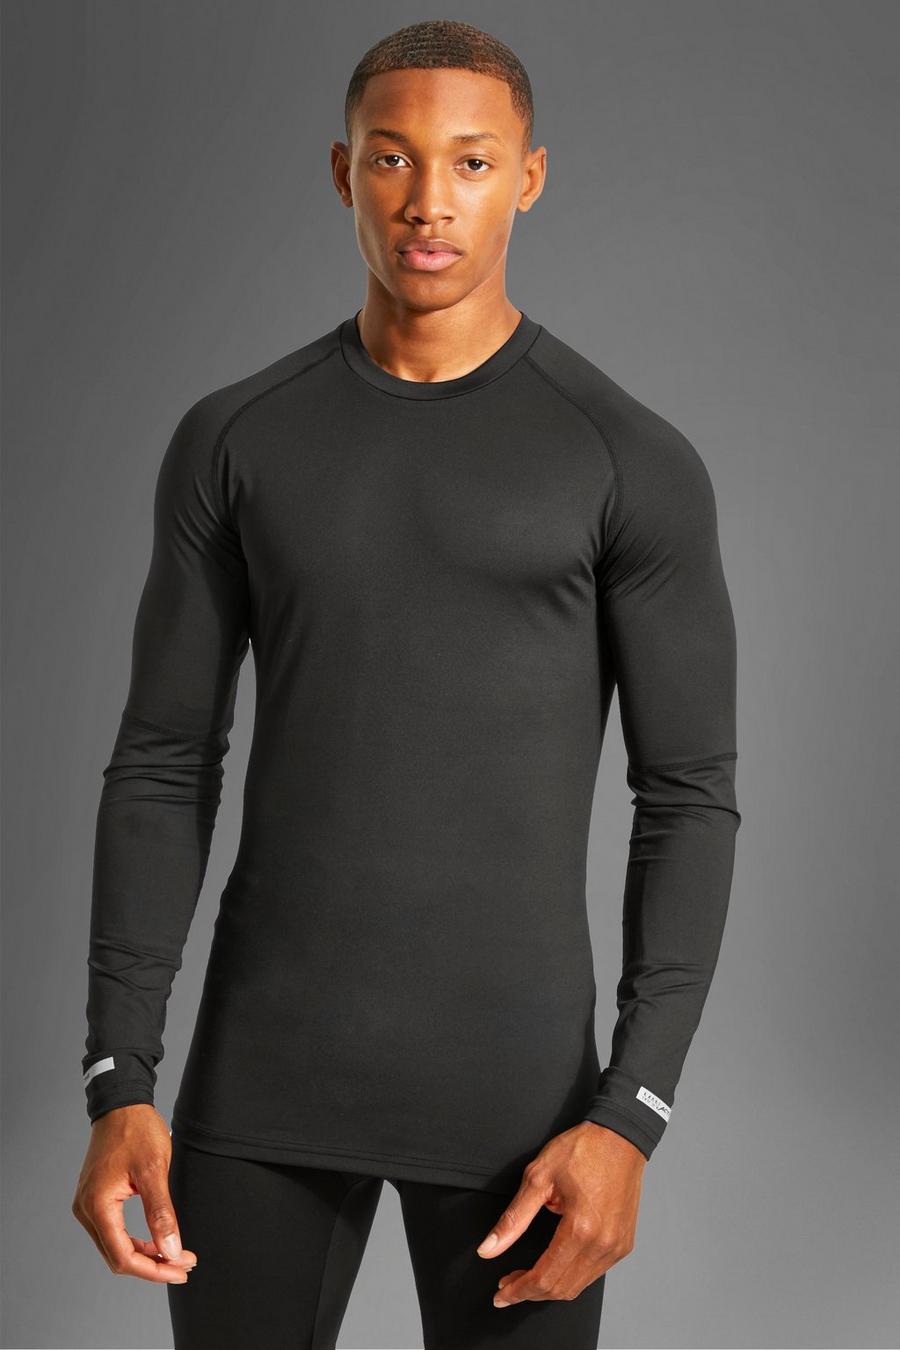 Camiseta Active Compression deportiva resistente, Black nero image number 1